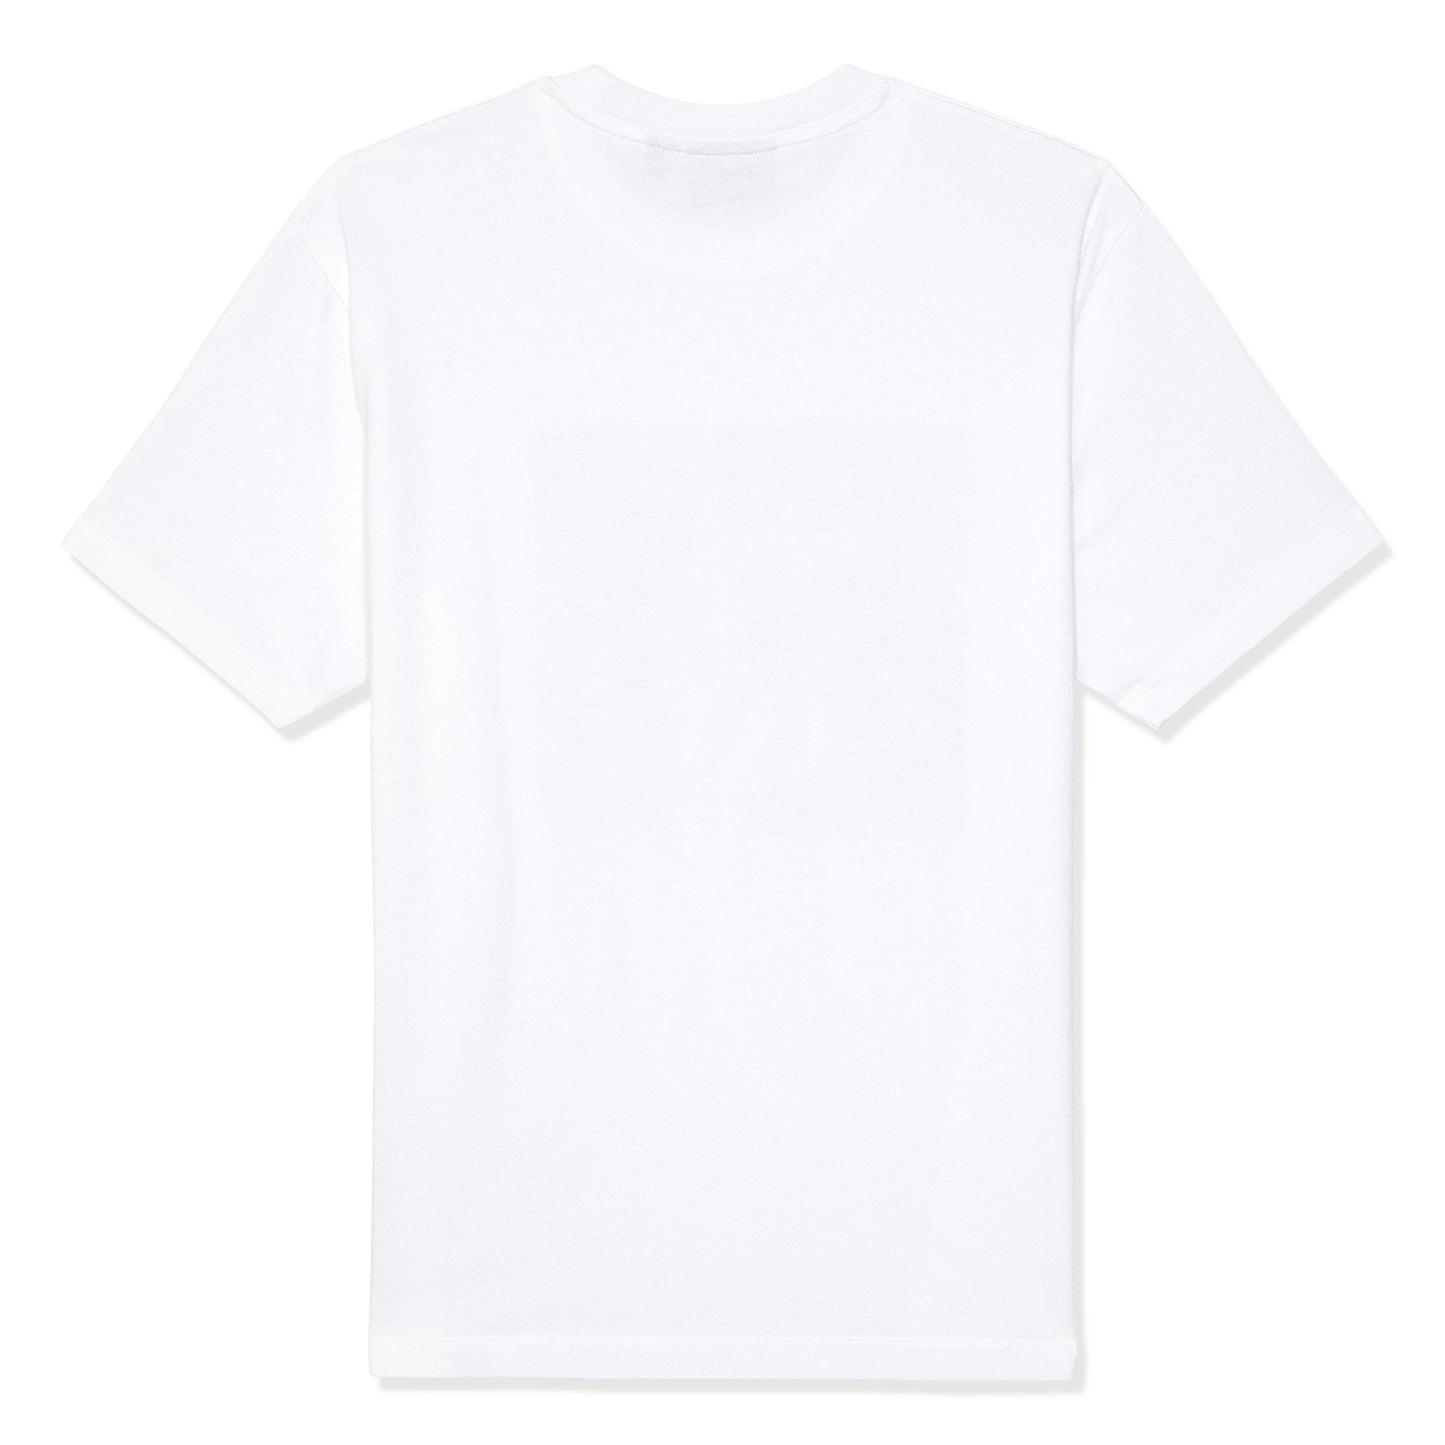 by Parra Self Defense T-Shirt (White)